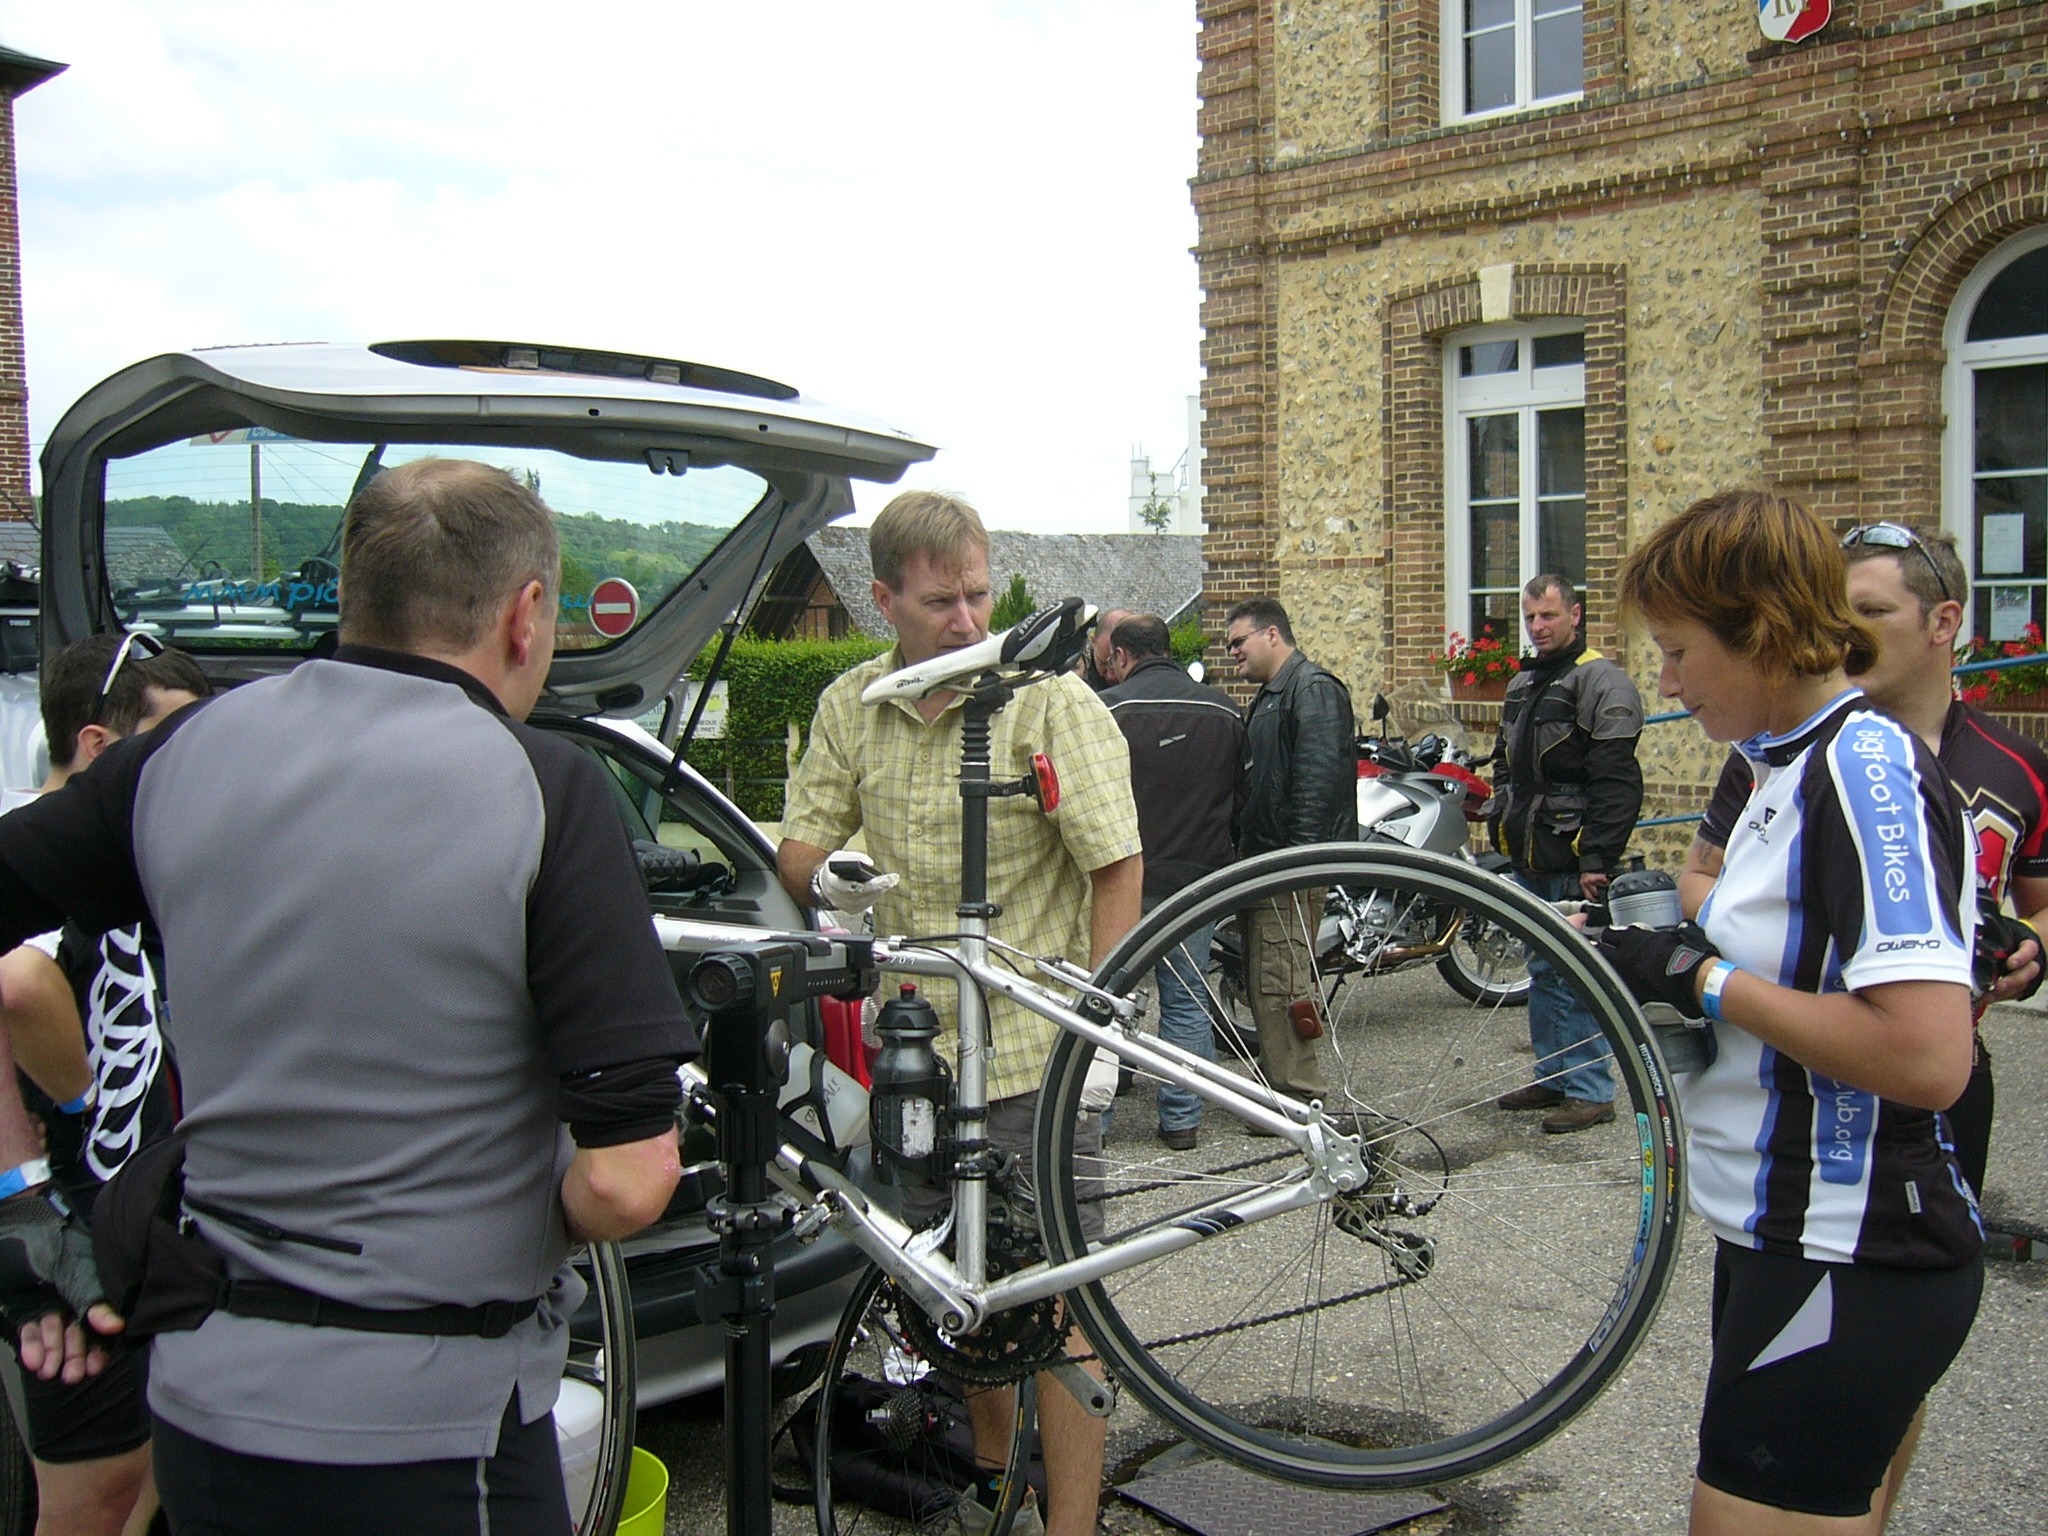 2007 London to Paris 3 day cycle trip